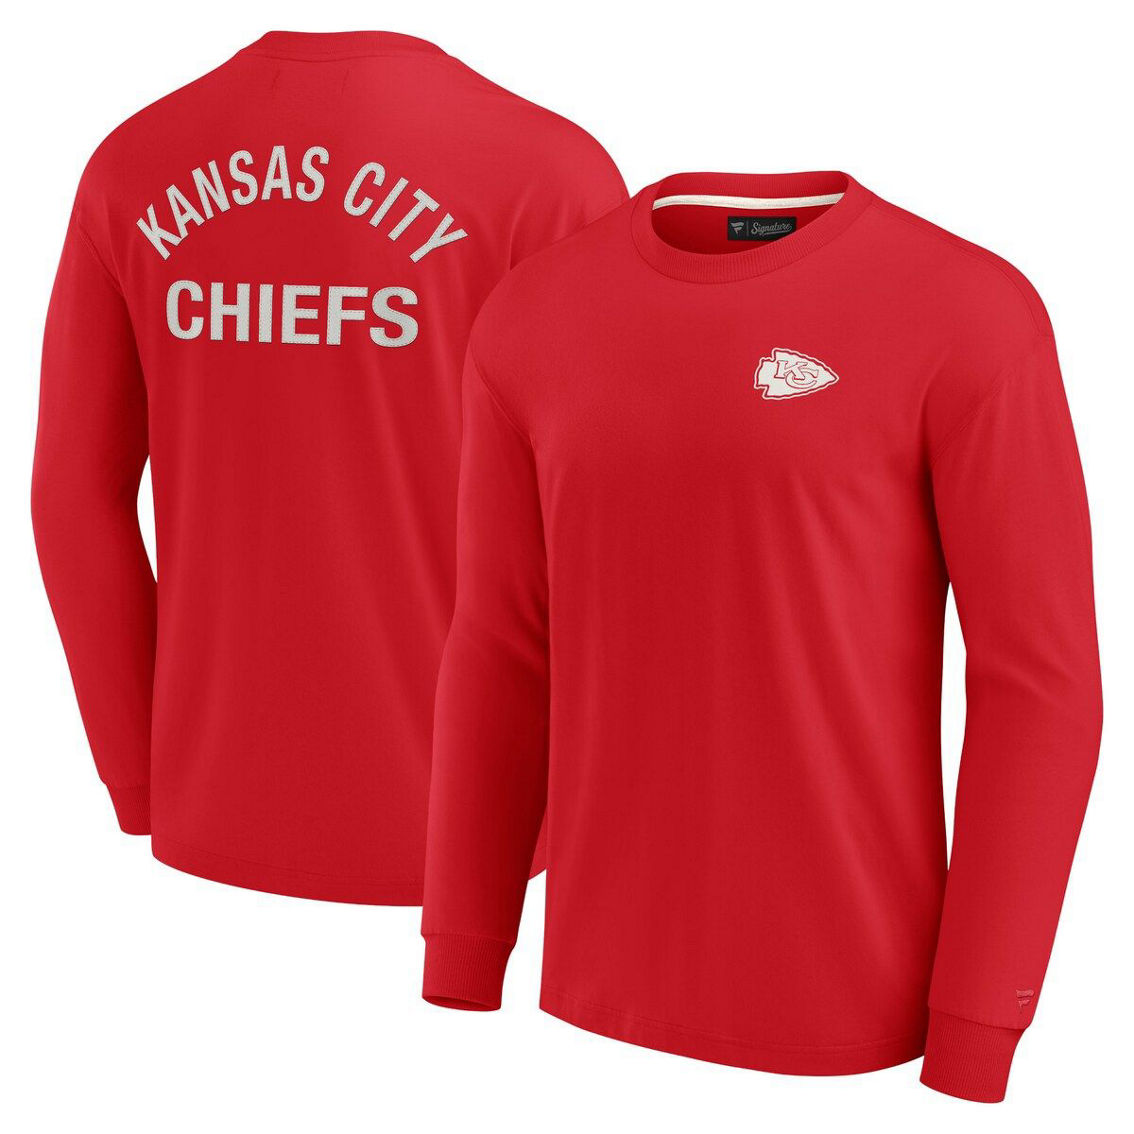 Fanatics Signature Unisex Fanatics Signature Red Kansas City Chiefs Super Soft Long Sleeve T-Shirt - Image 2 of 4